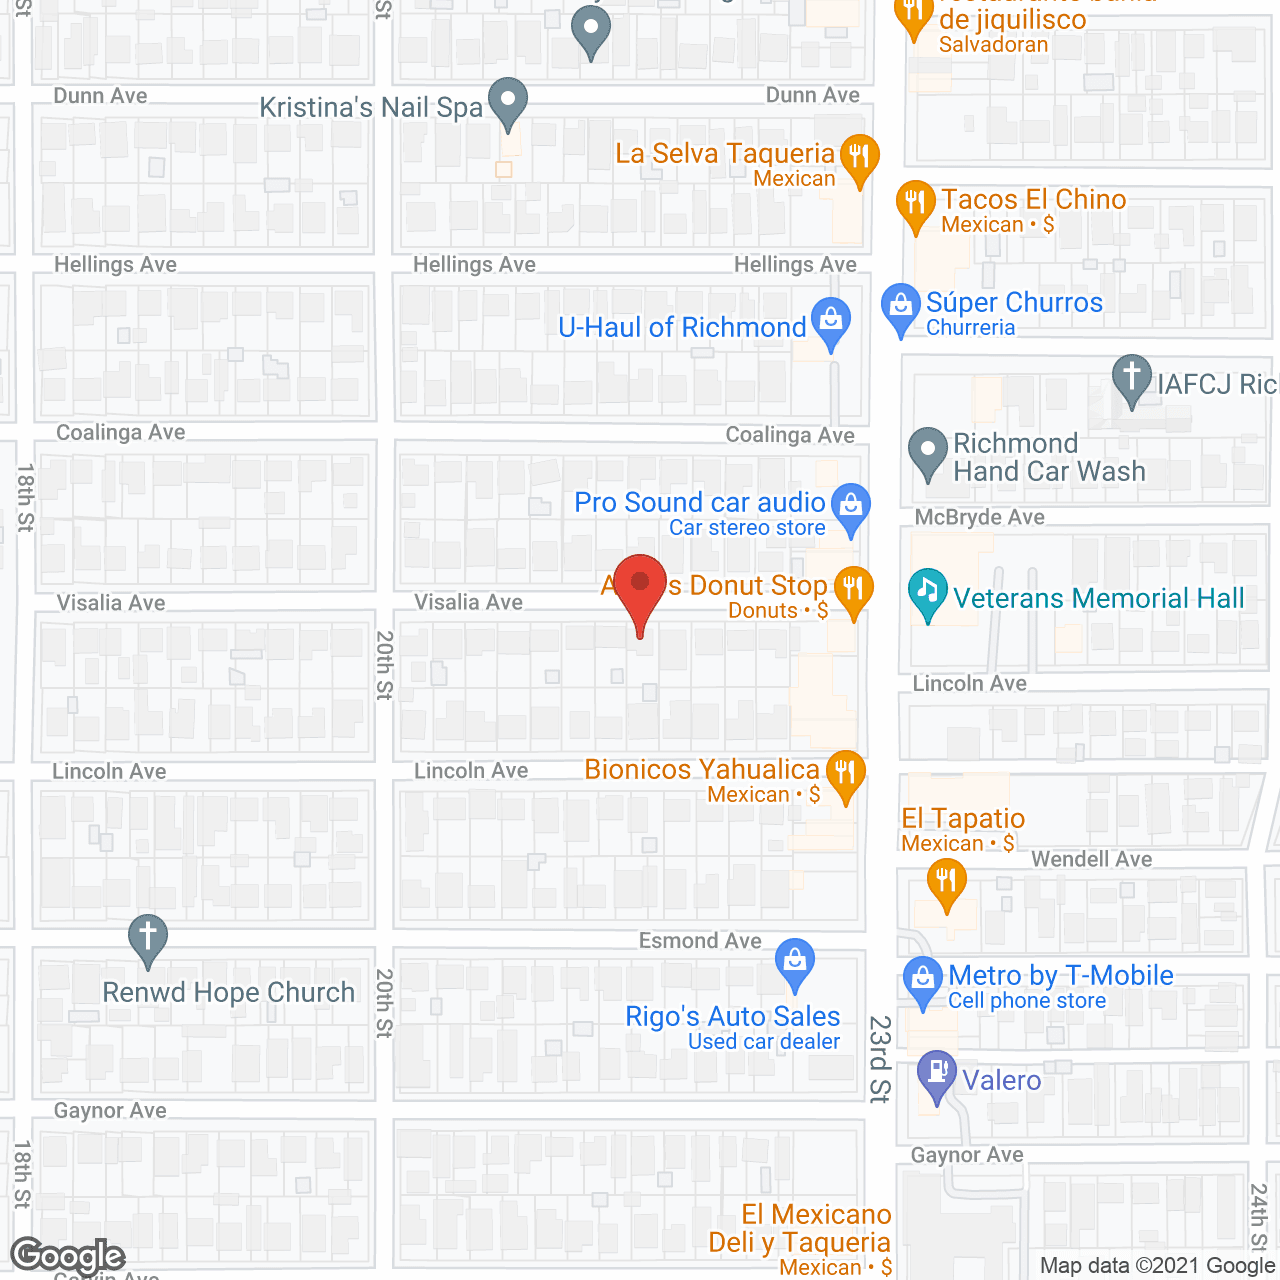 Visalia Place (CLOSED) in google map